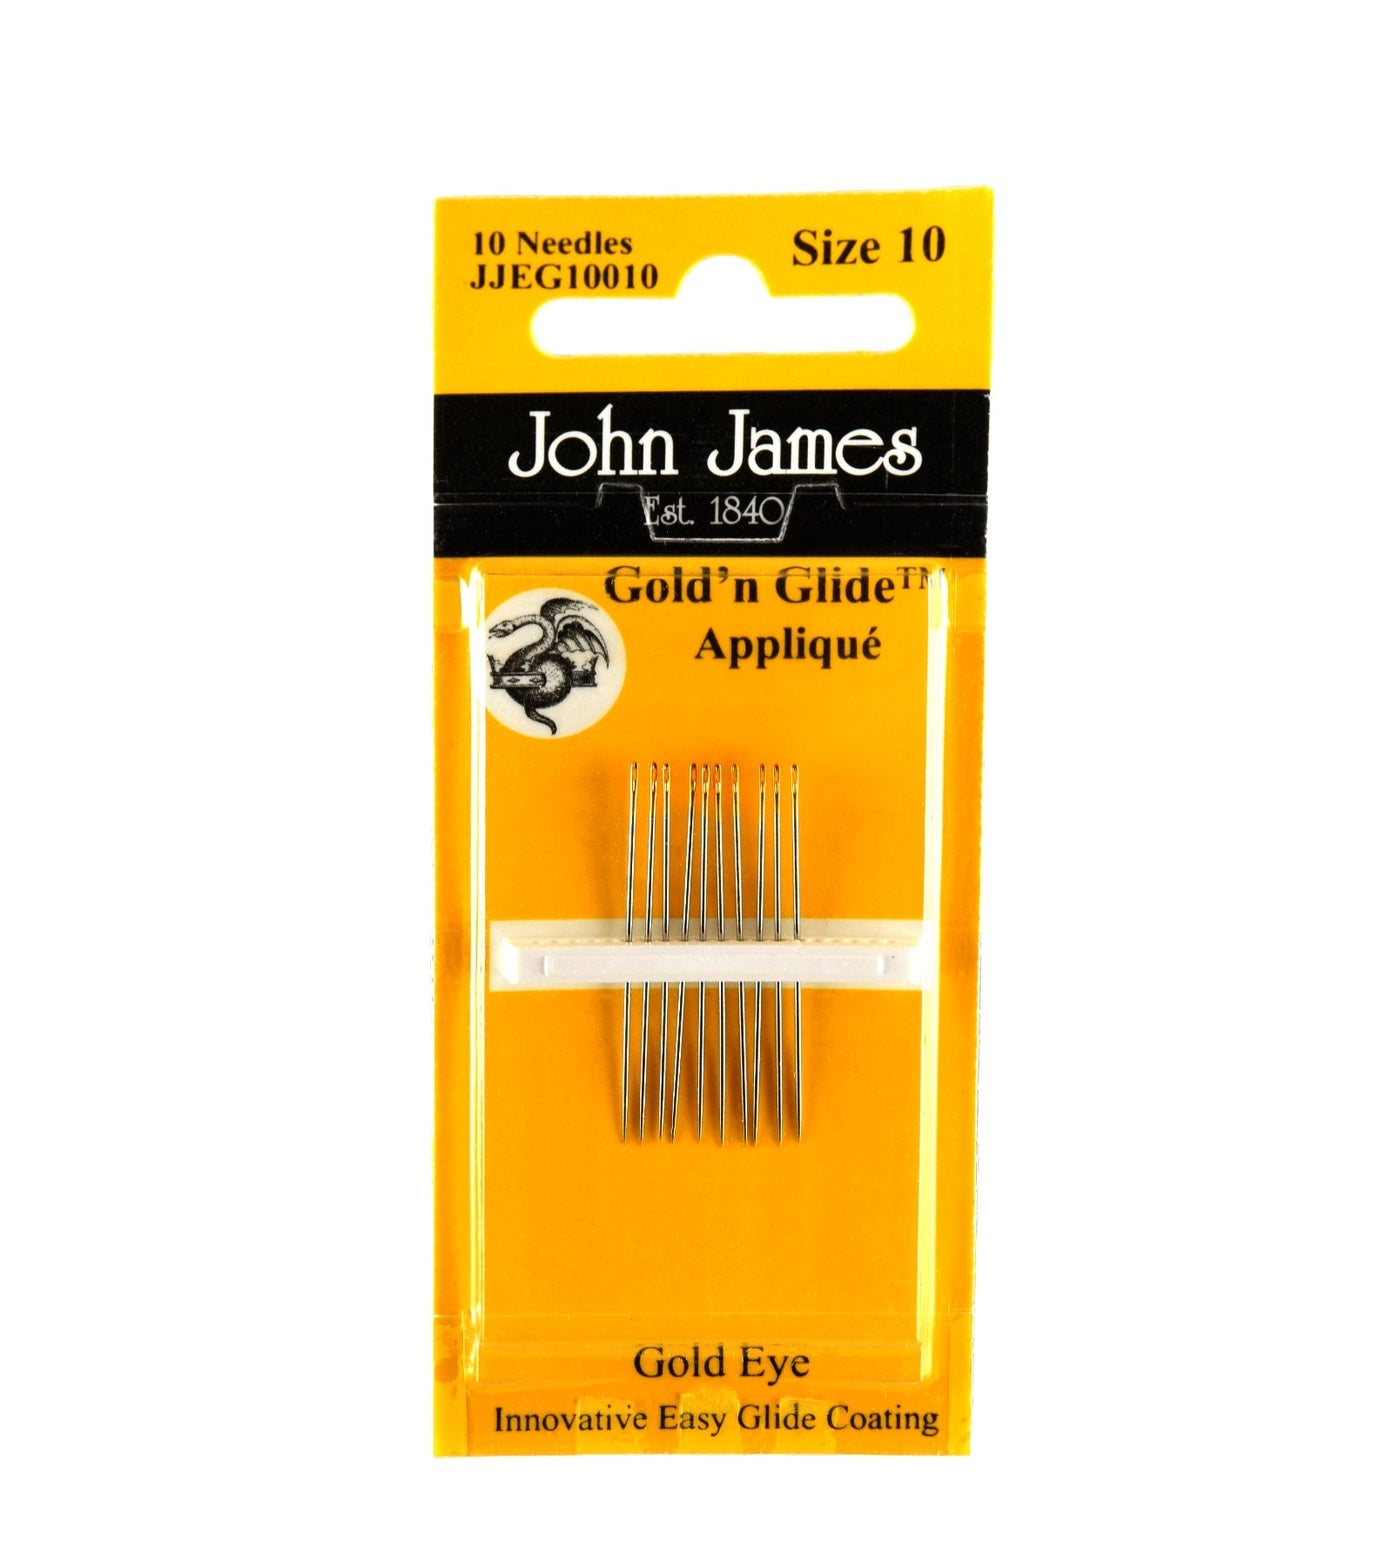 Gold n Glide Appliqué Needles (10396767113)